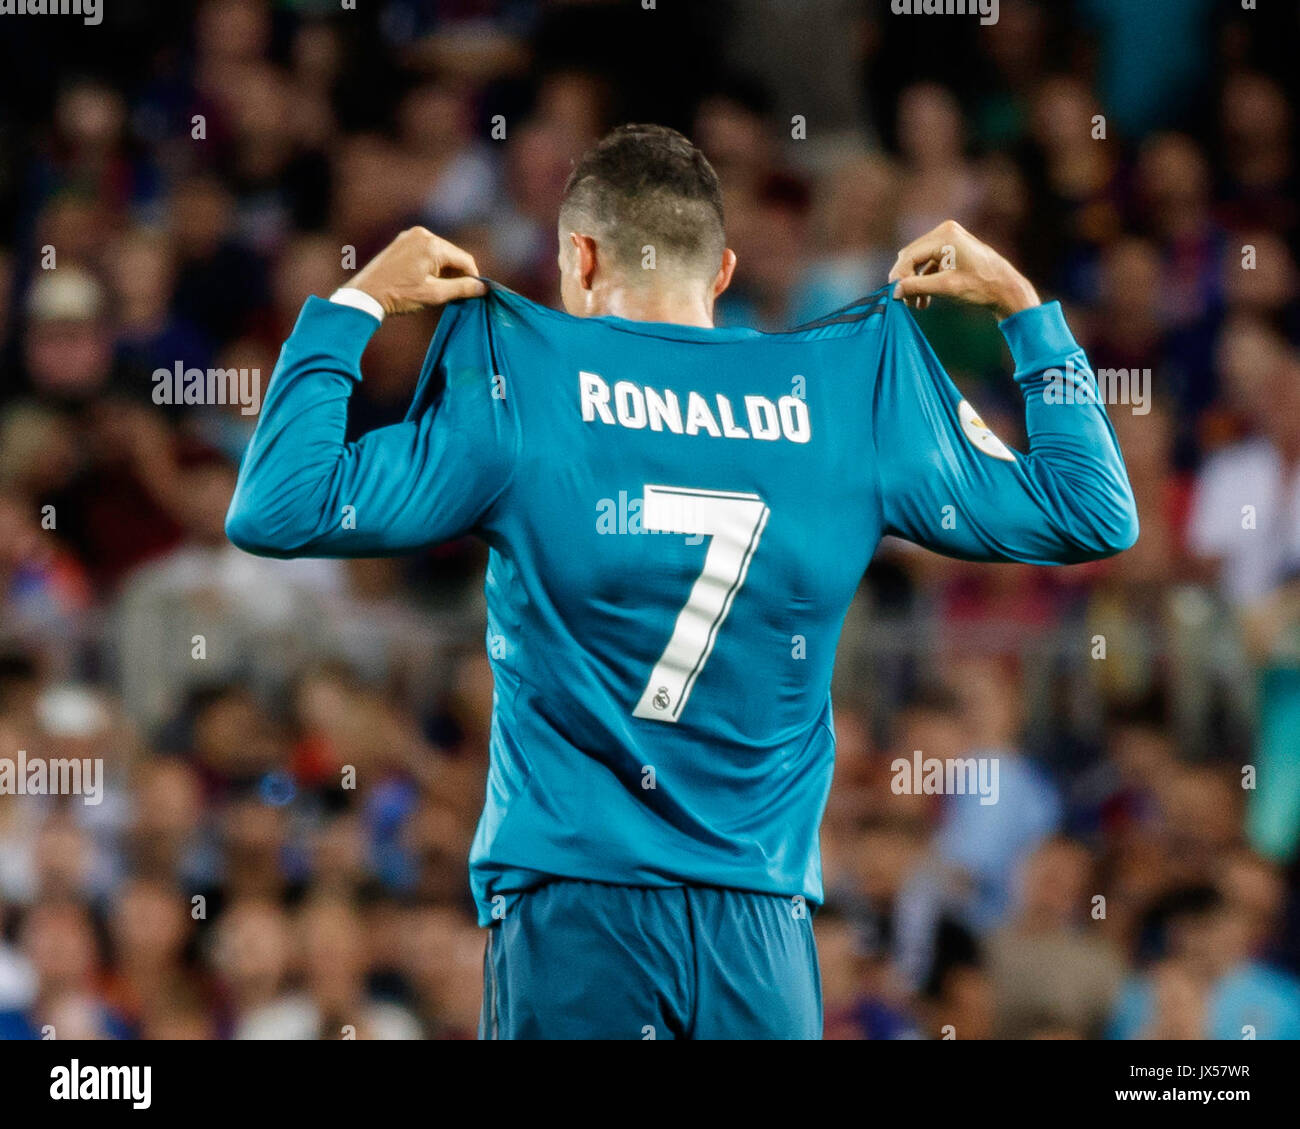 Ronaldo Shirt High Resolution Stock Photography and Images - Alamy